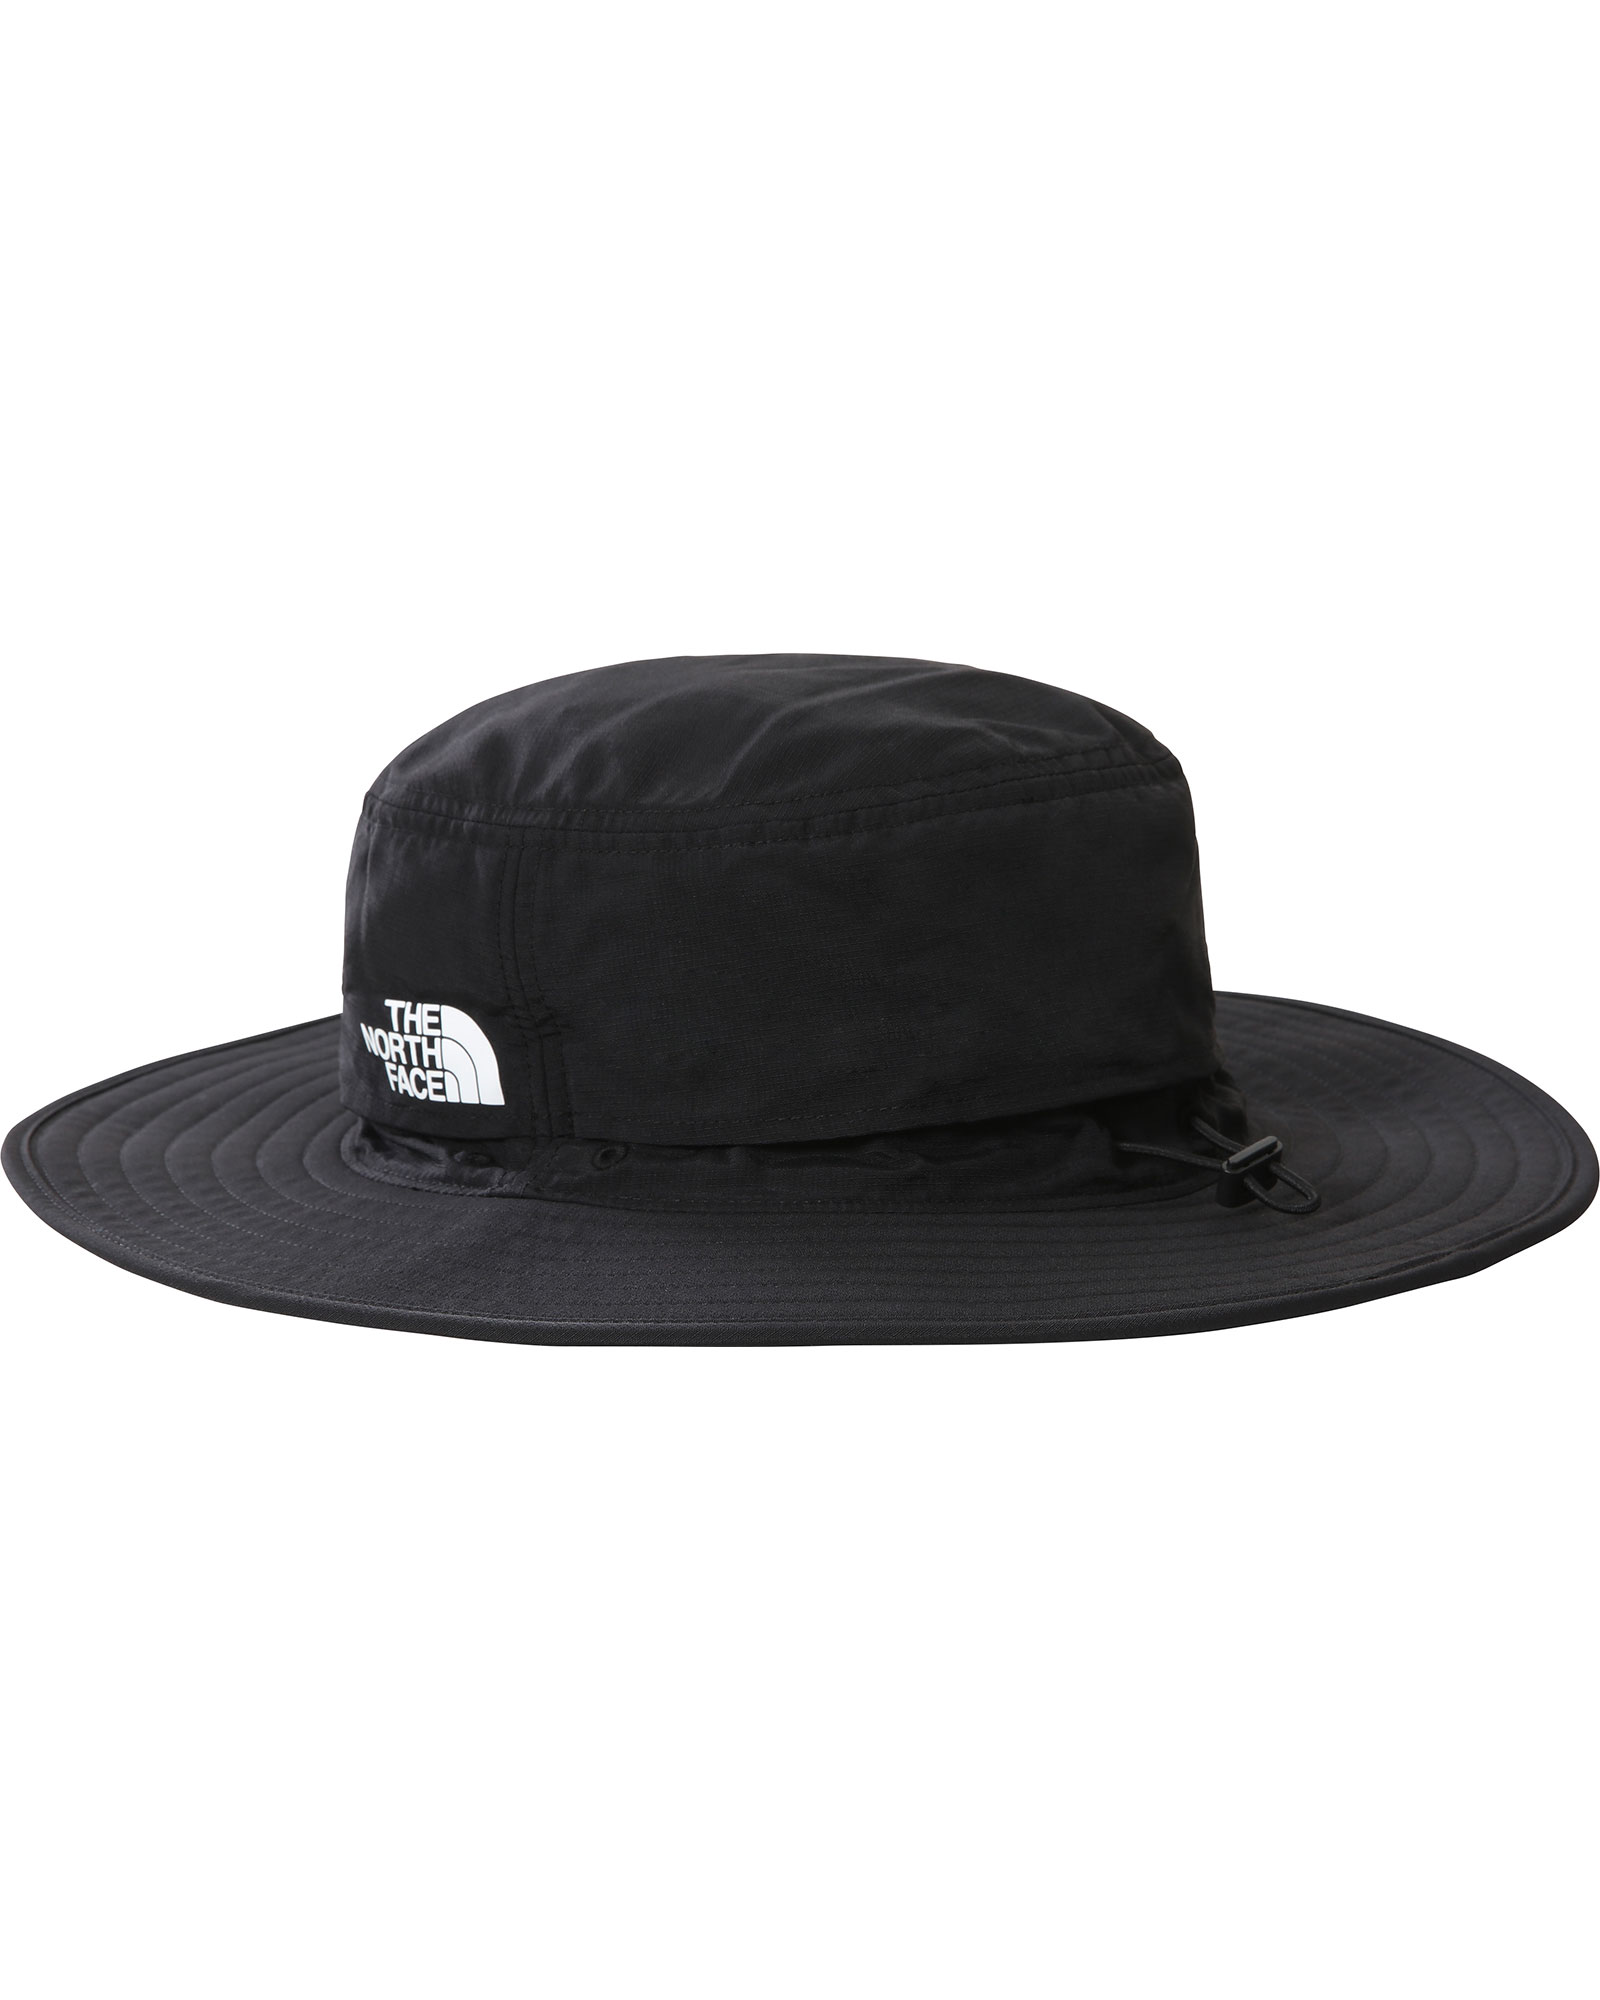 The North Face Horizon Breeze Brimmer Hat - TNF Black S/M